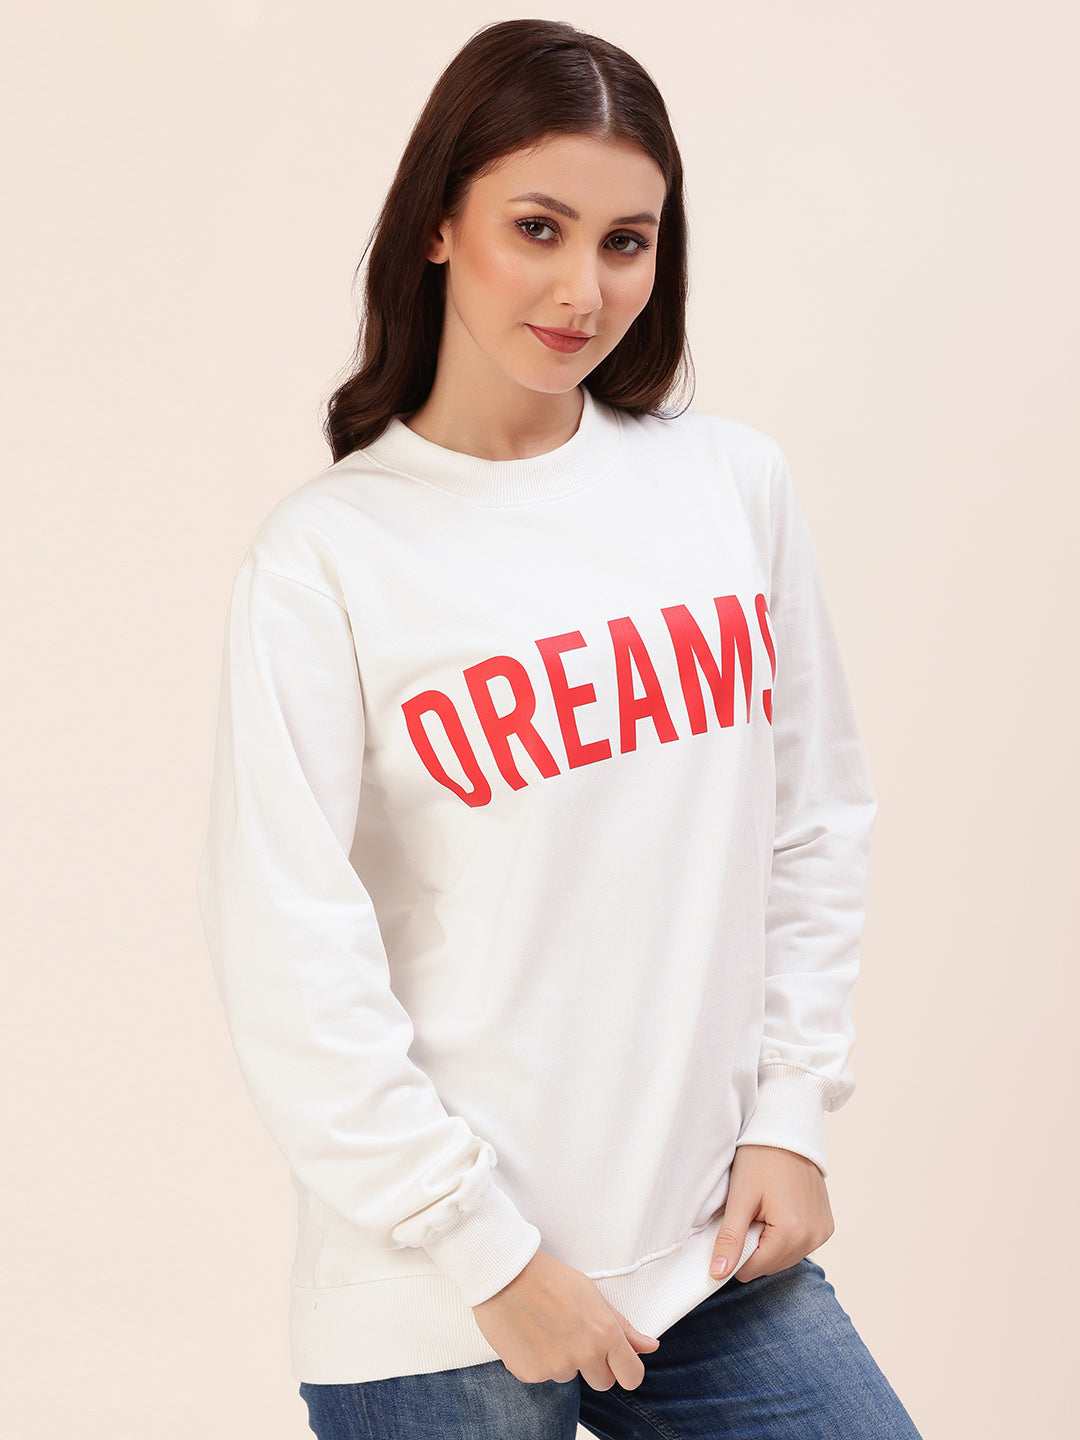 Dreams White Printed Sweatshirt